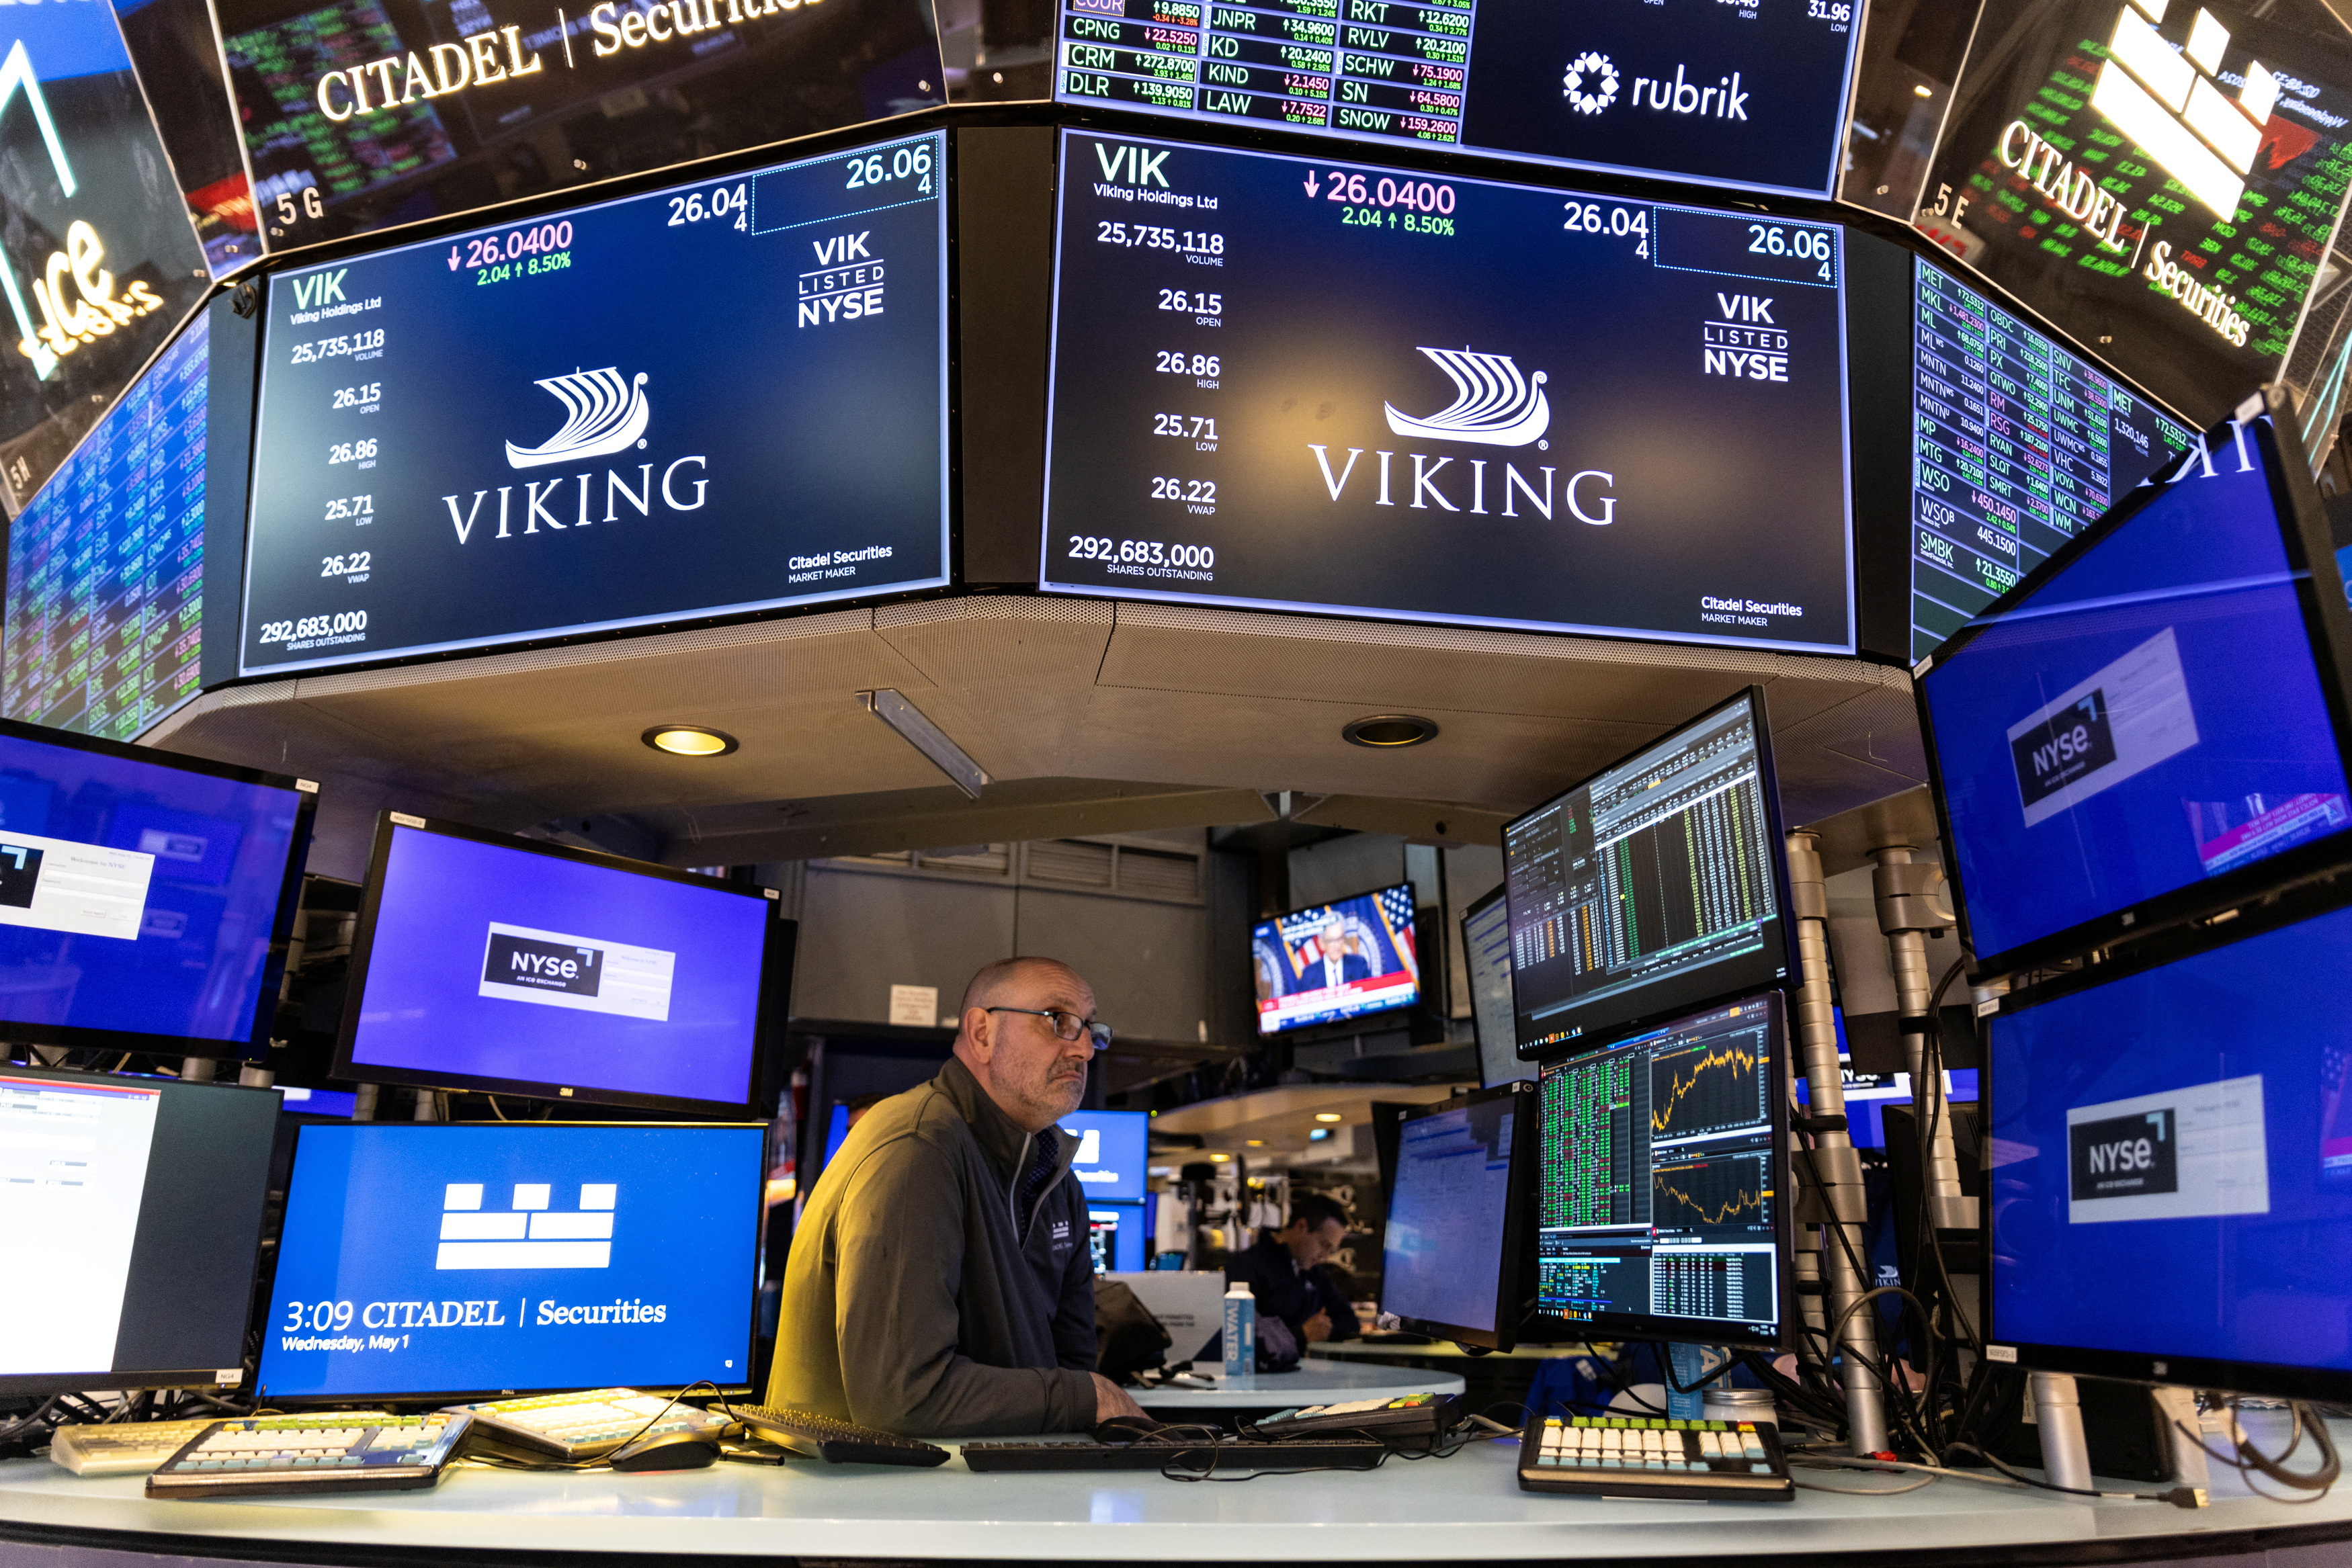 Viking started trading on the New York Stock Exchange under the ticker “VIK.”